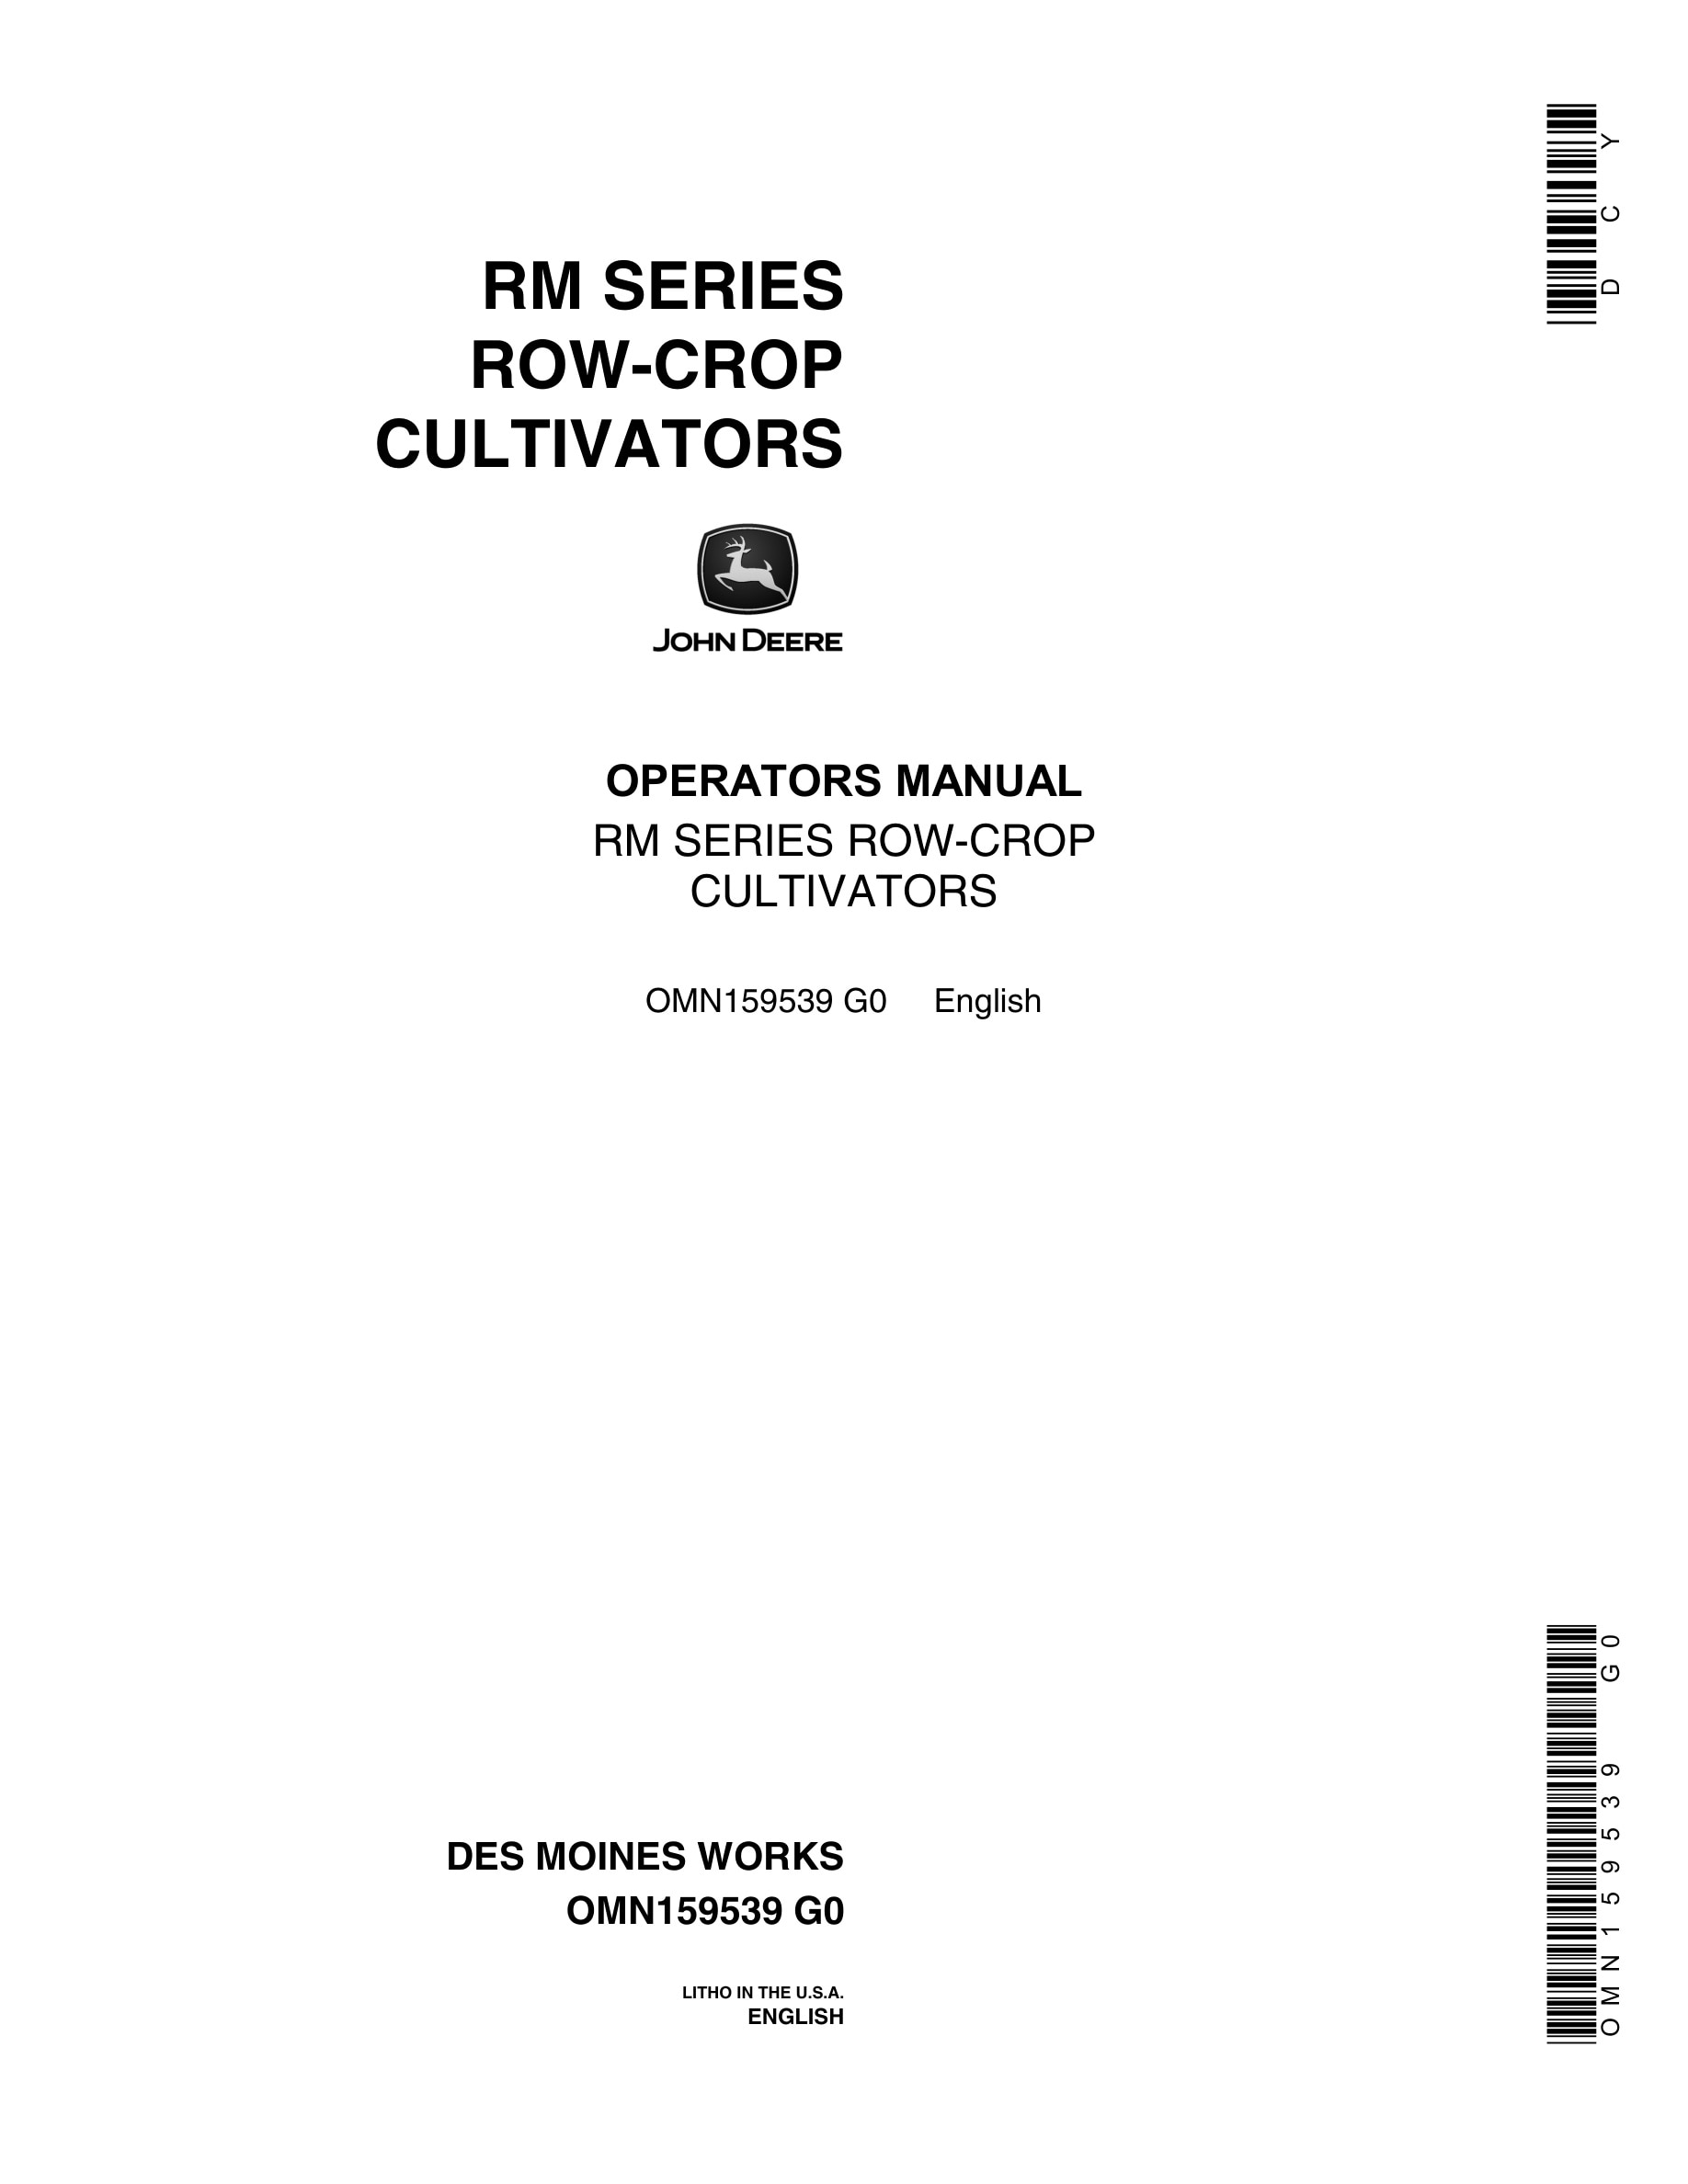 John Deere RM SERIES ROW-CROP CULTIVATOR Operator Manual OMN159539-1